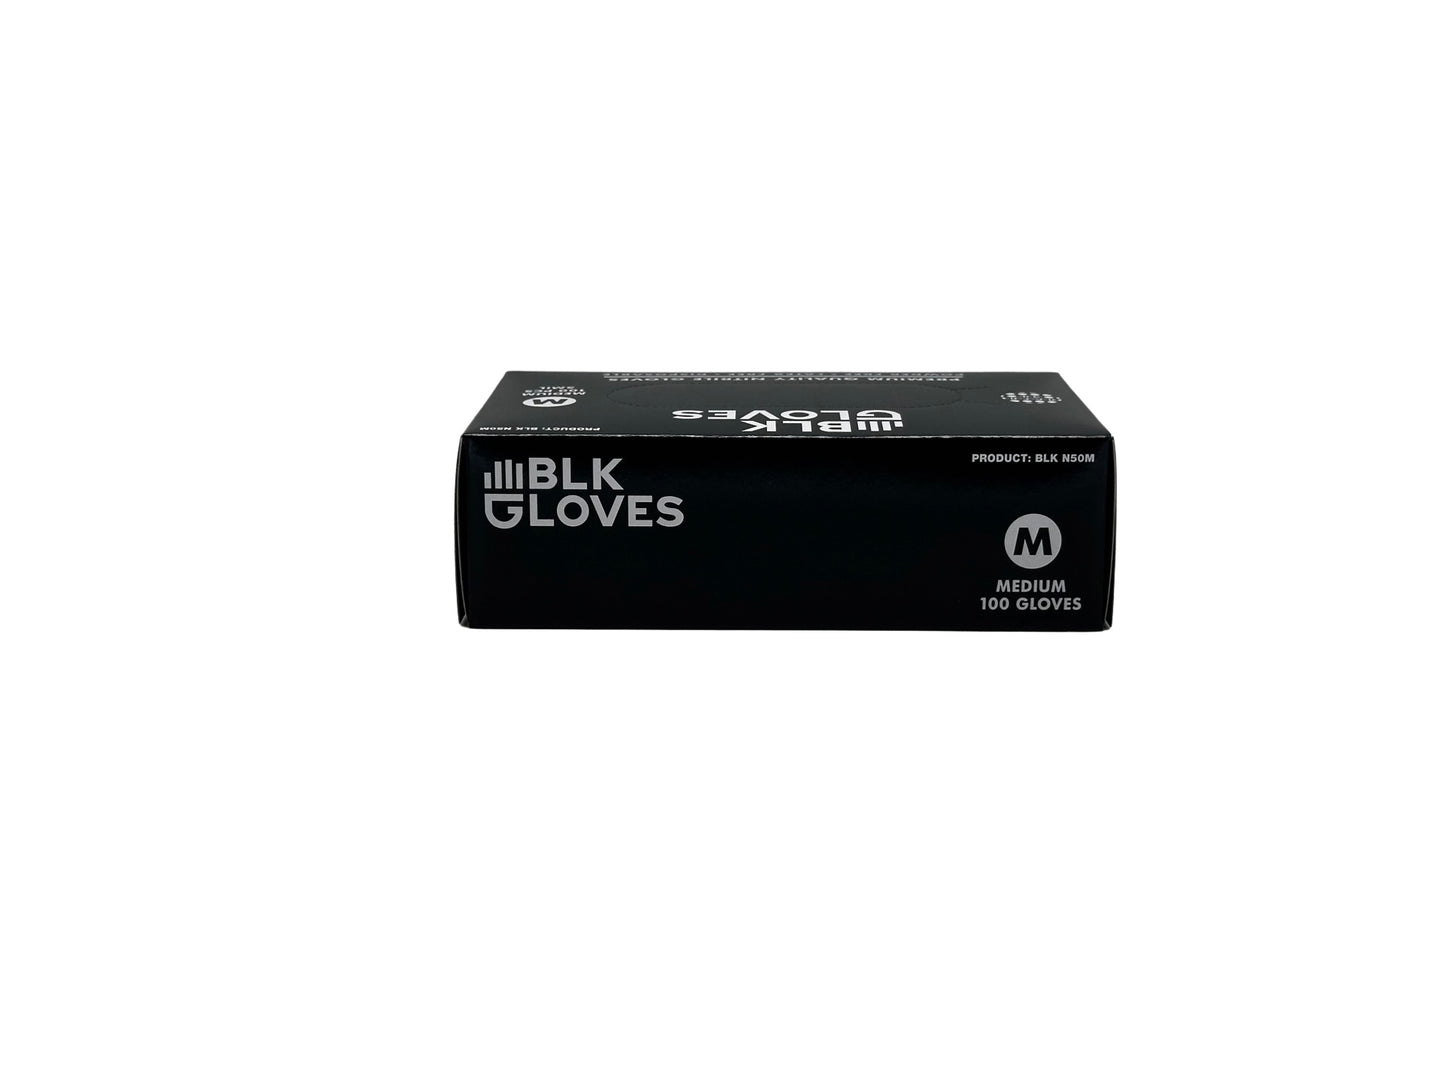 Blk Gloves - Single Box [100 Gloves]